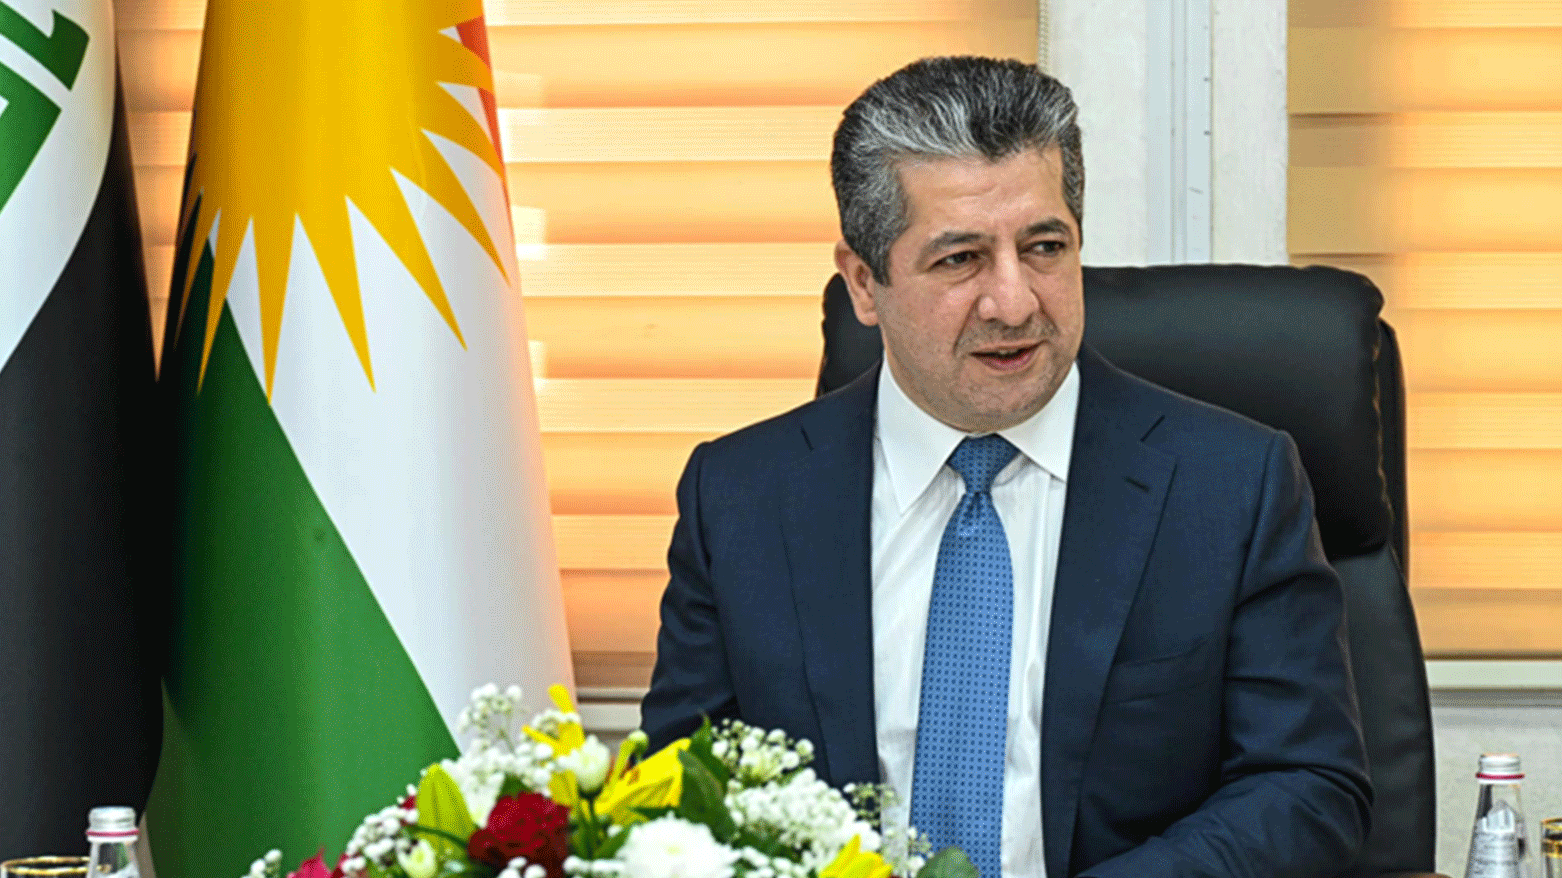 Kurdistan Region Prime Minister Masrour Barzani. (Photo: Kurdistan24)